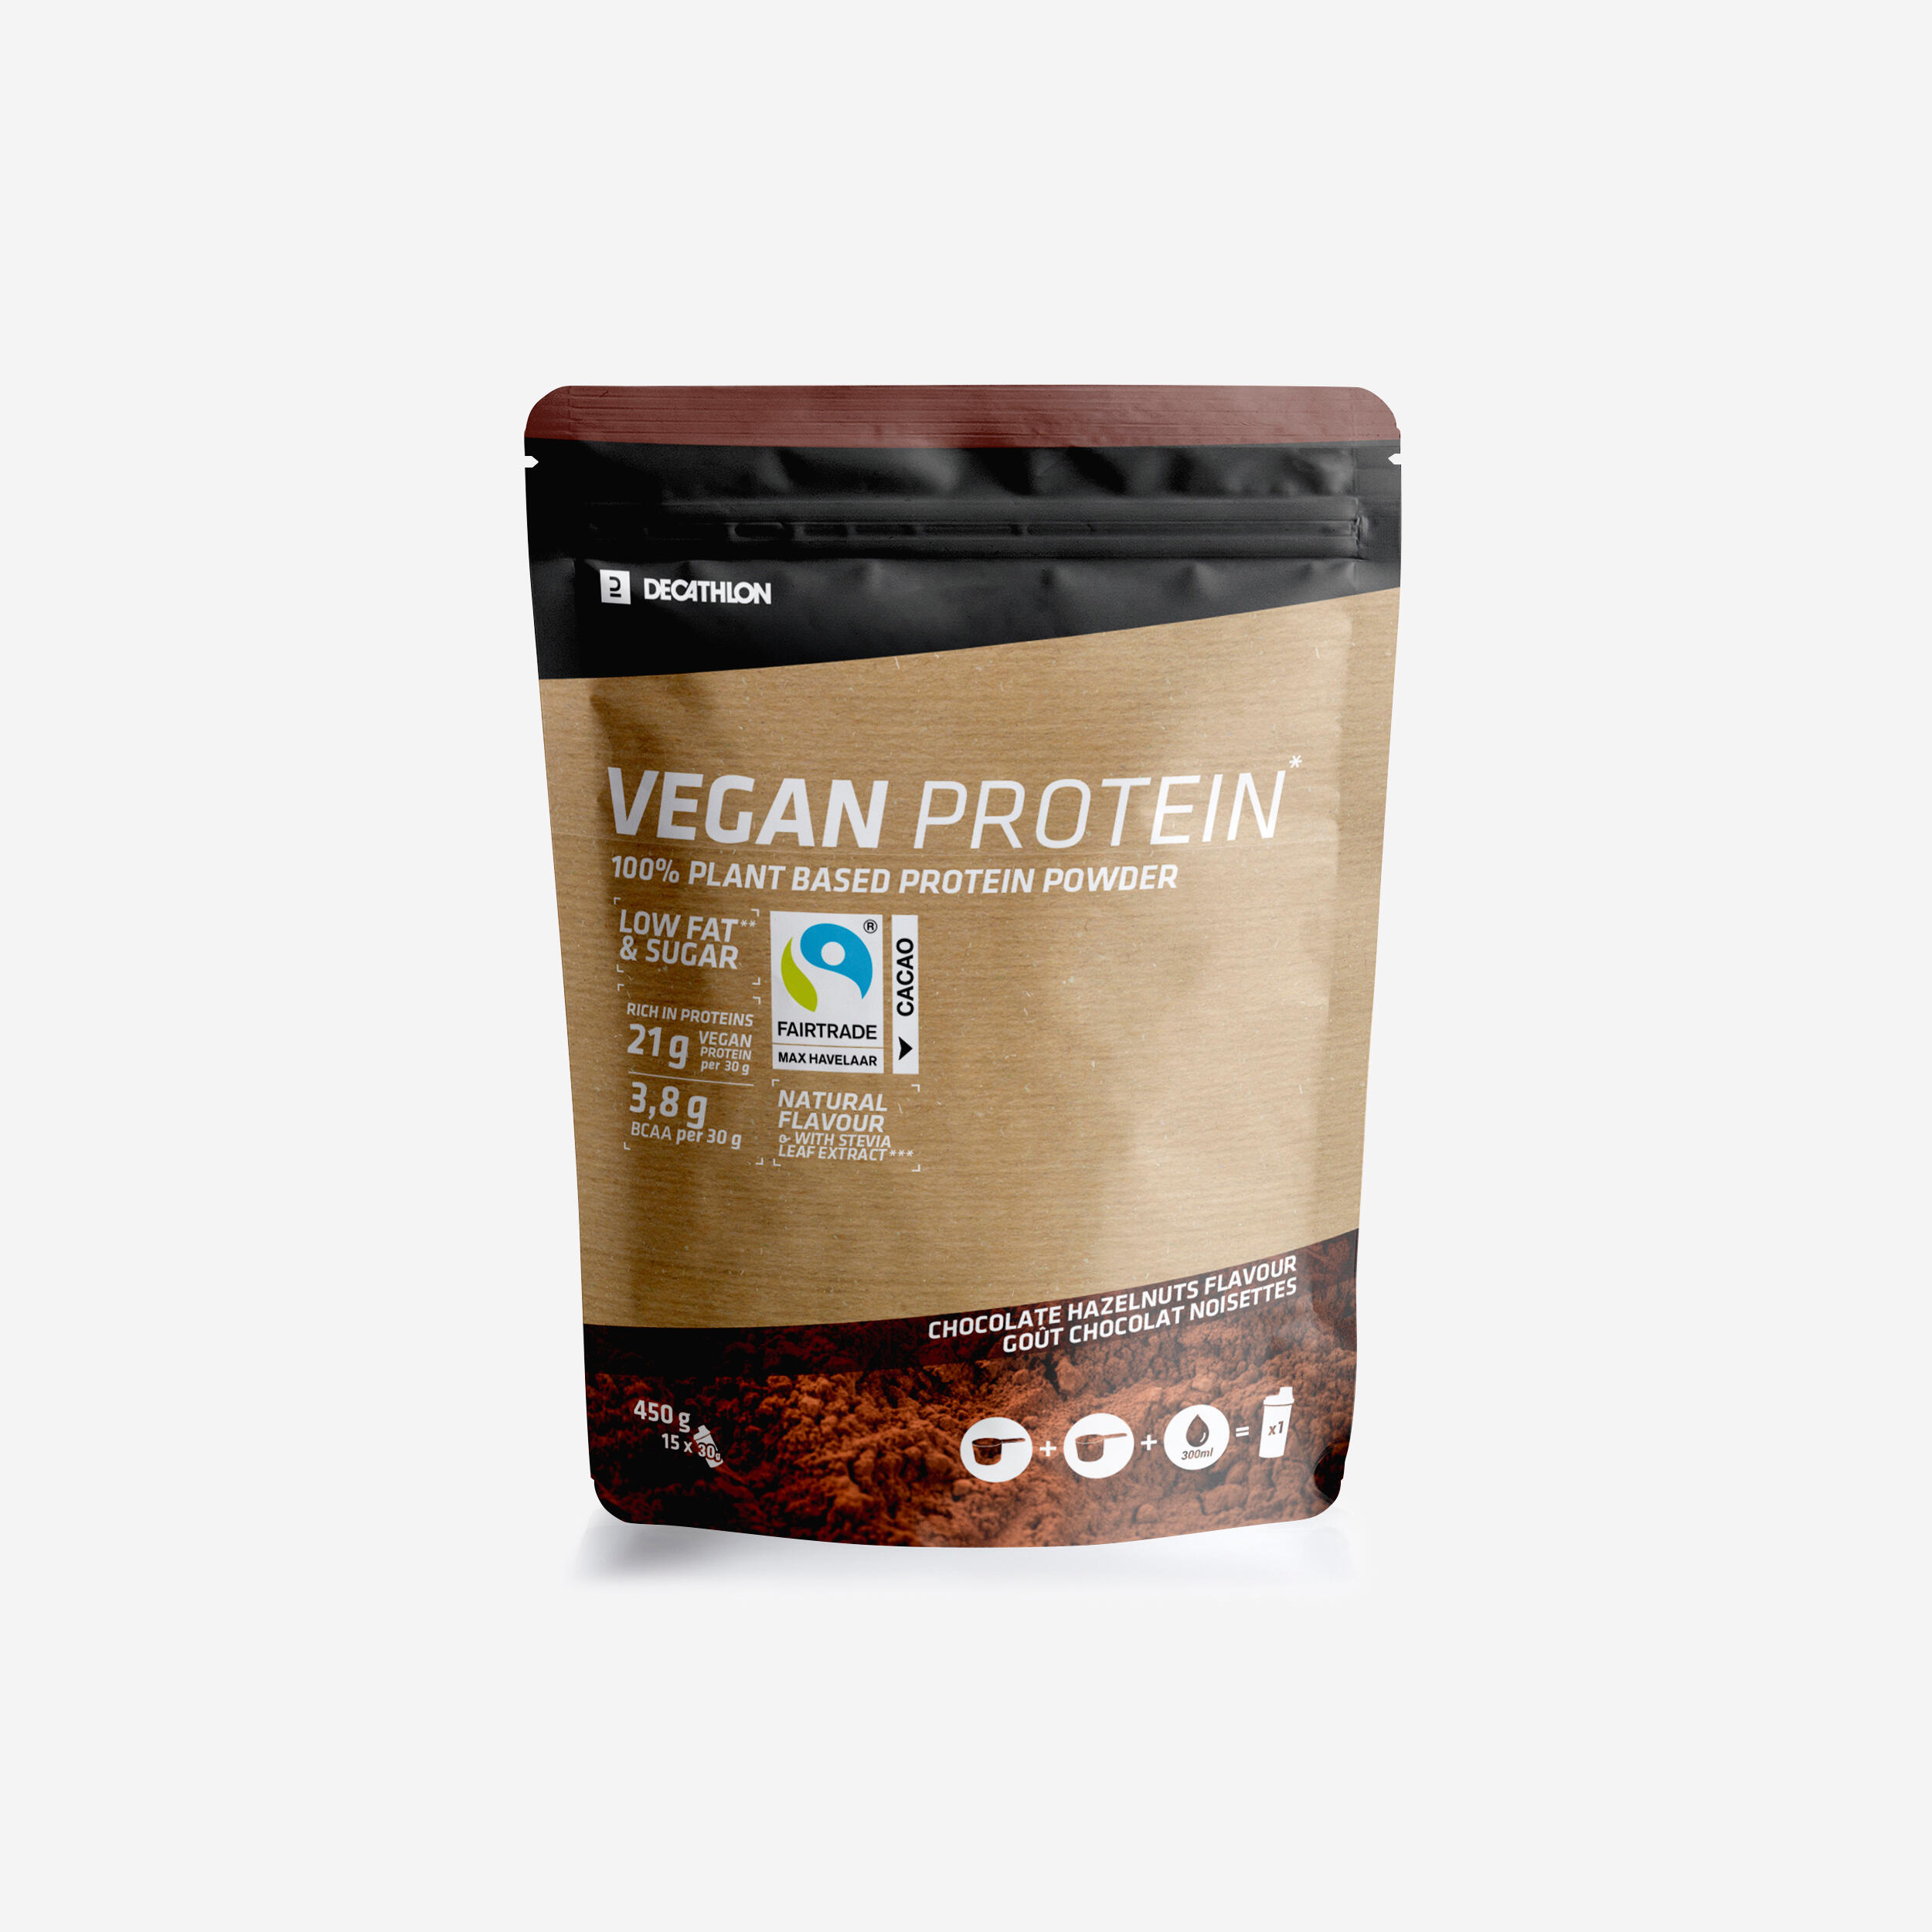 CORENGTH Vegan Protein 450 g - Chocolate Hazelnut